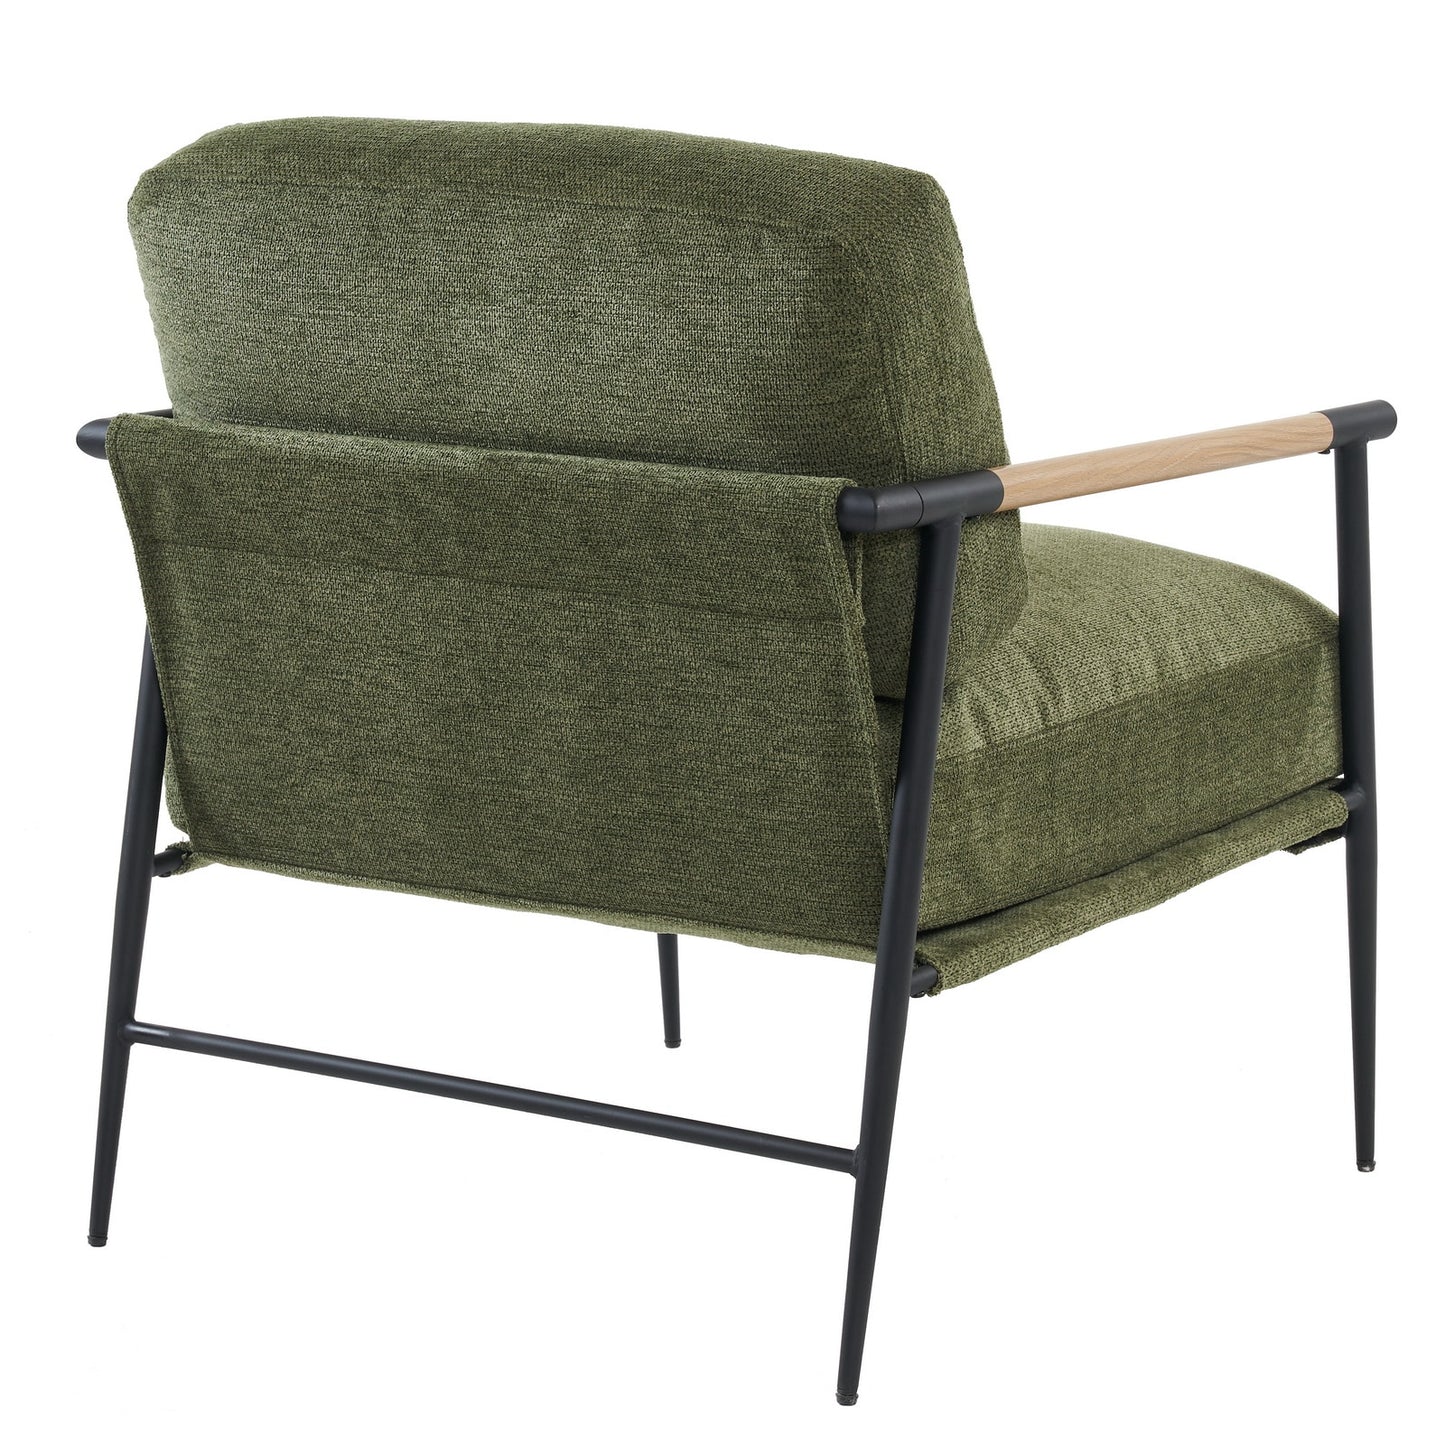 [Flash Sale]Leisure Chair Lounge Chair Velvet Armchair Living Room Furniture White/Black/Blue/Green[US-W]